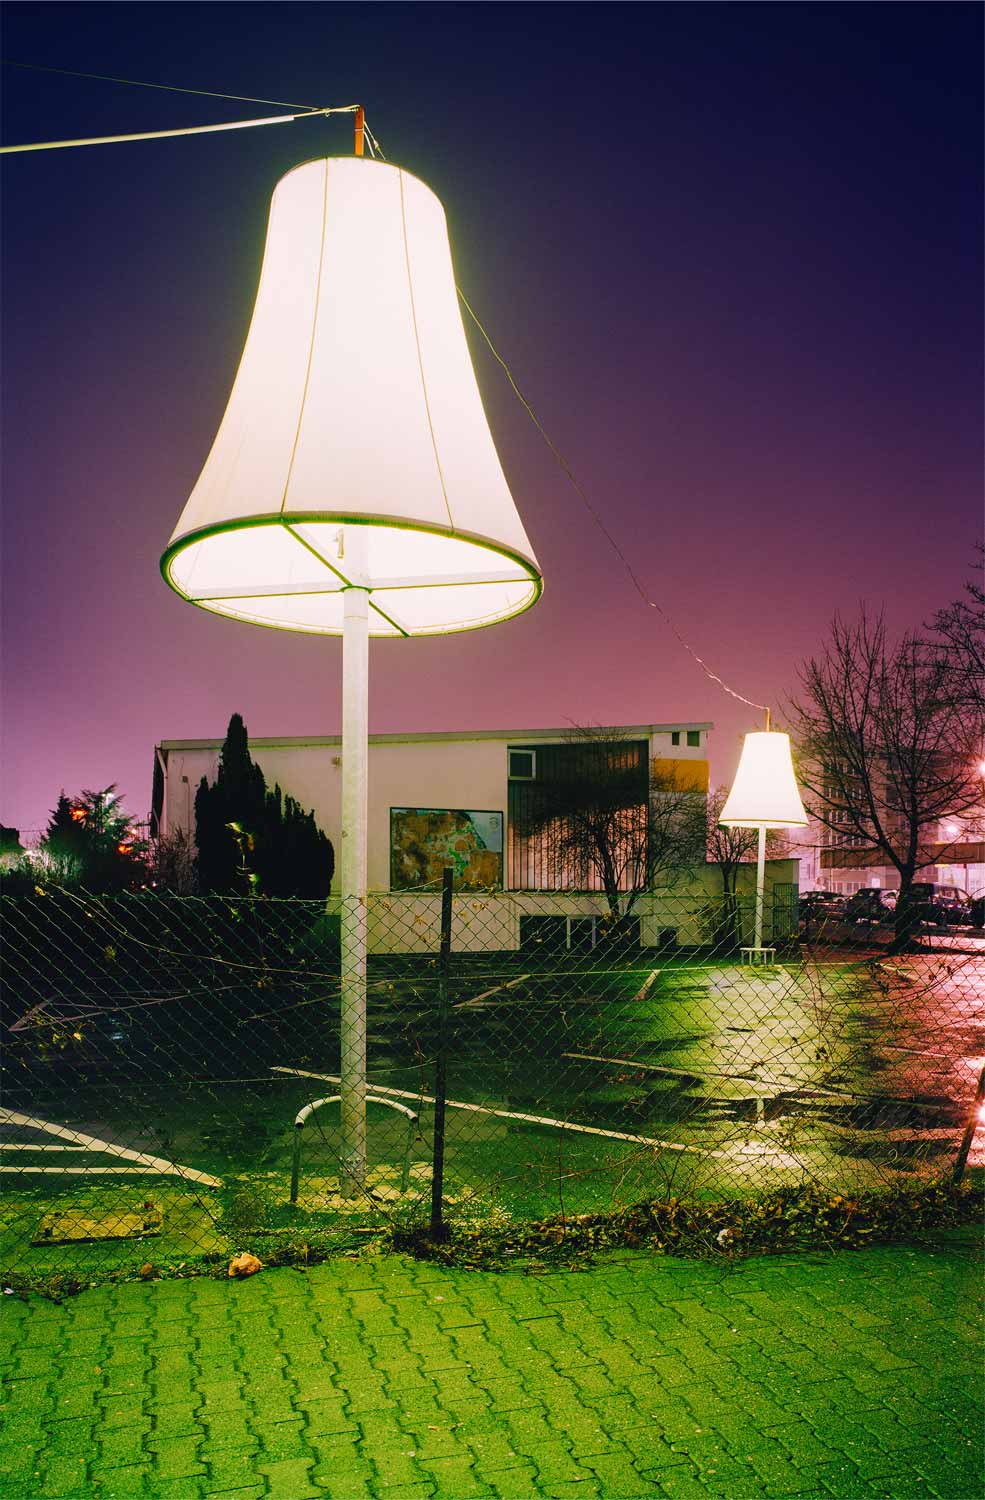 foto: manfred bogner, berlin, bei licht betrachtet